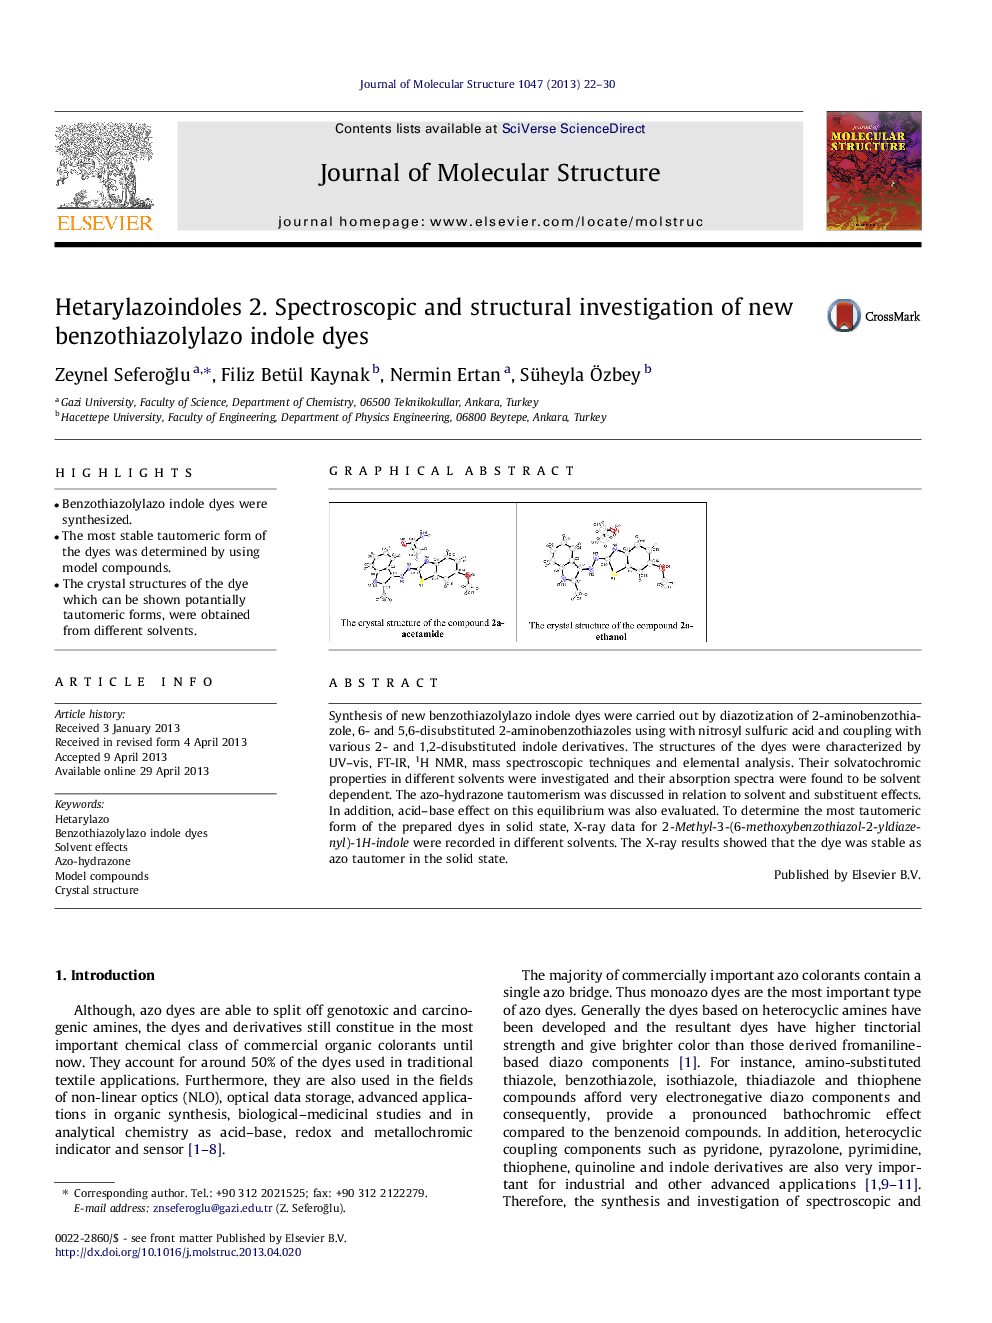 Hetarylazoindoles 2. Spectroscopic and structural investigation of new benzothiazolylazo indole dyes